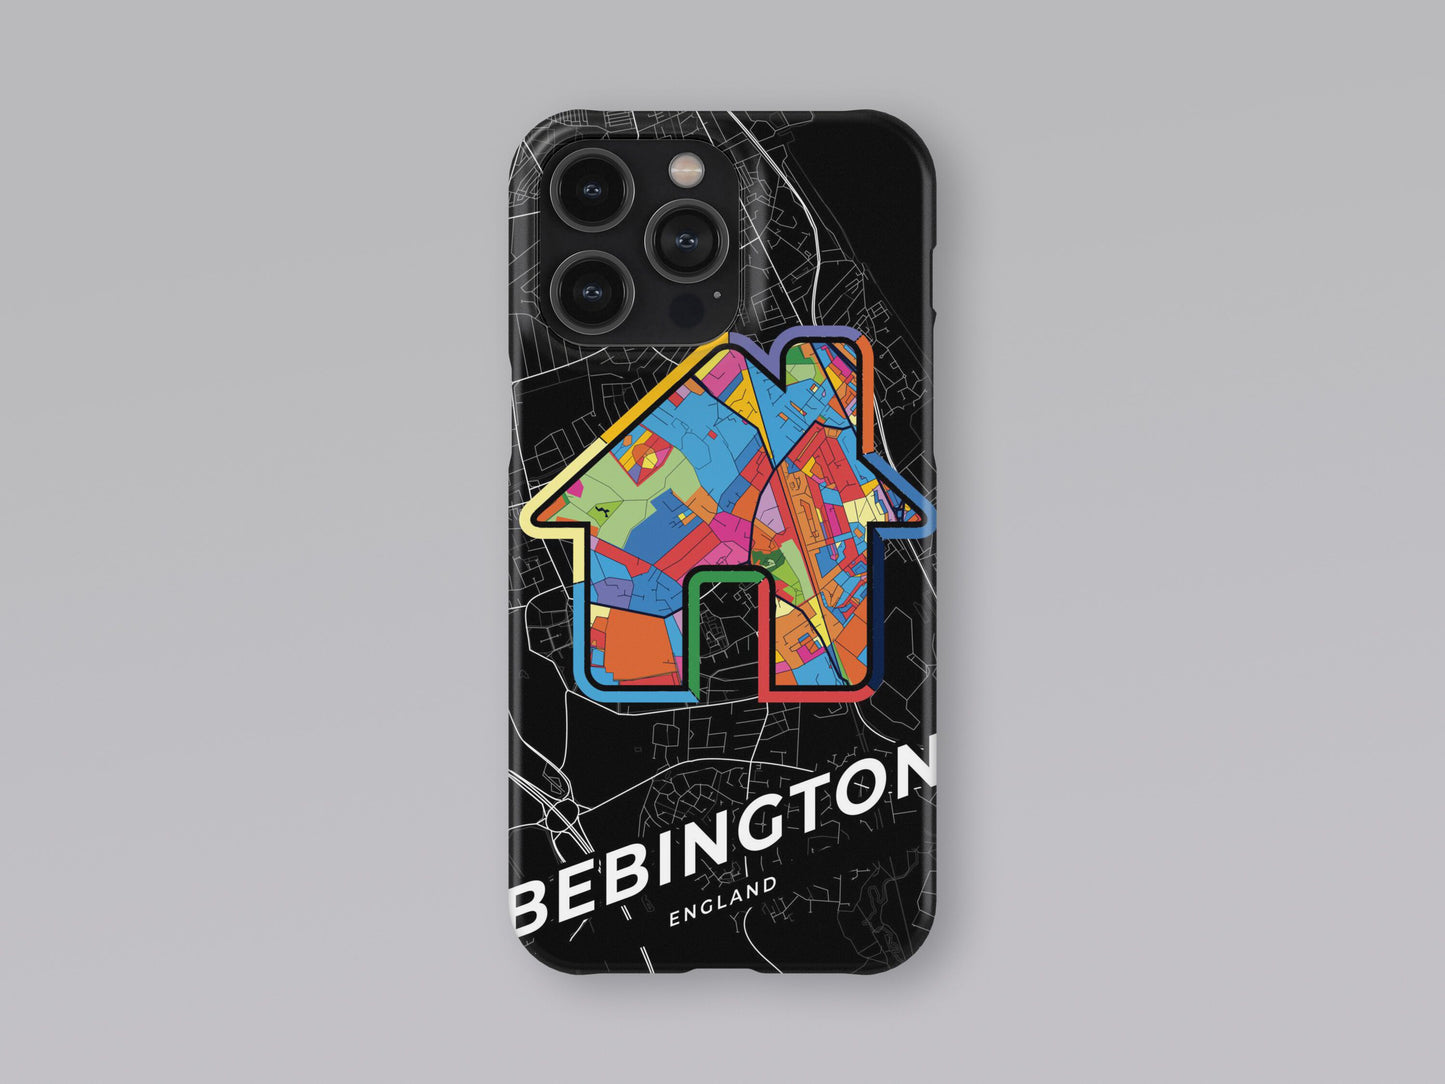 Bebington England slim phone case with colorful icon. Birthday, wedding or housewarming gift. Couple match cases. 3